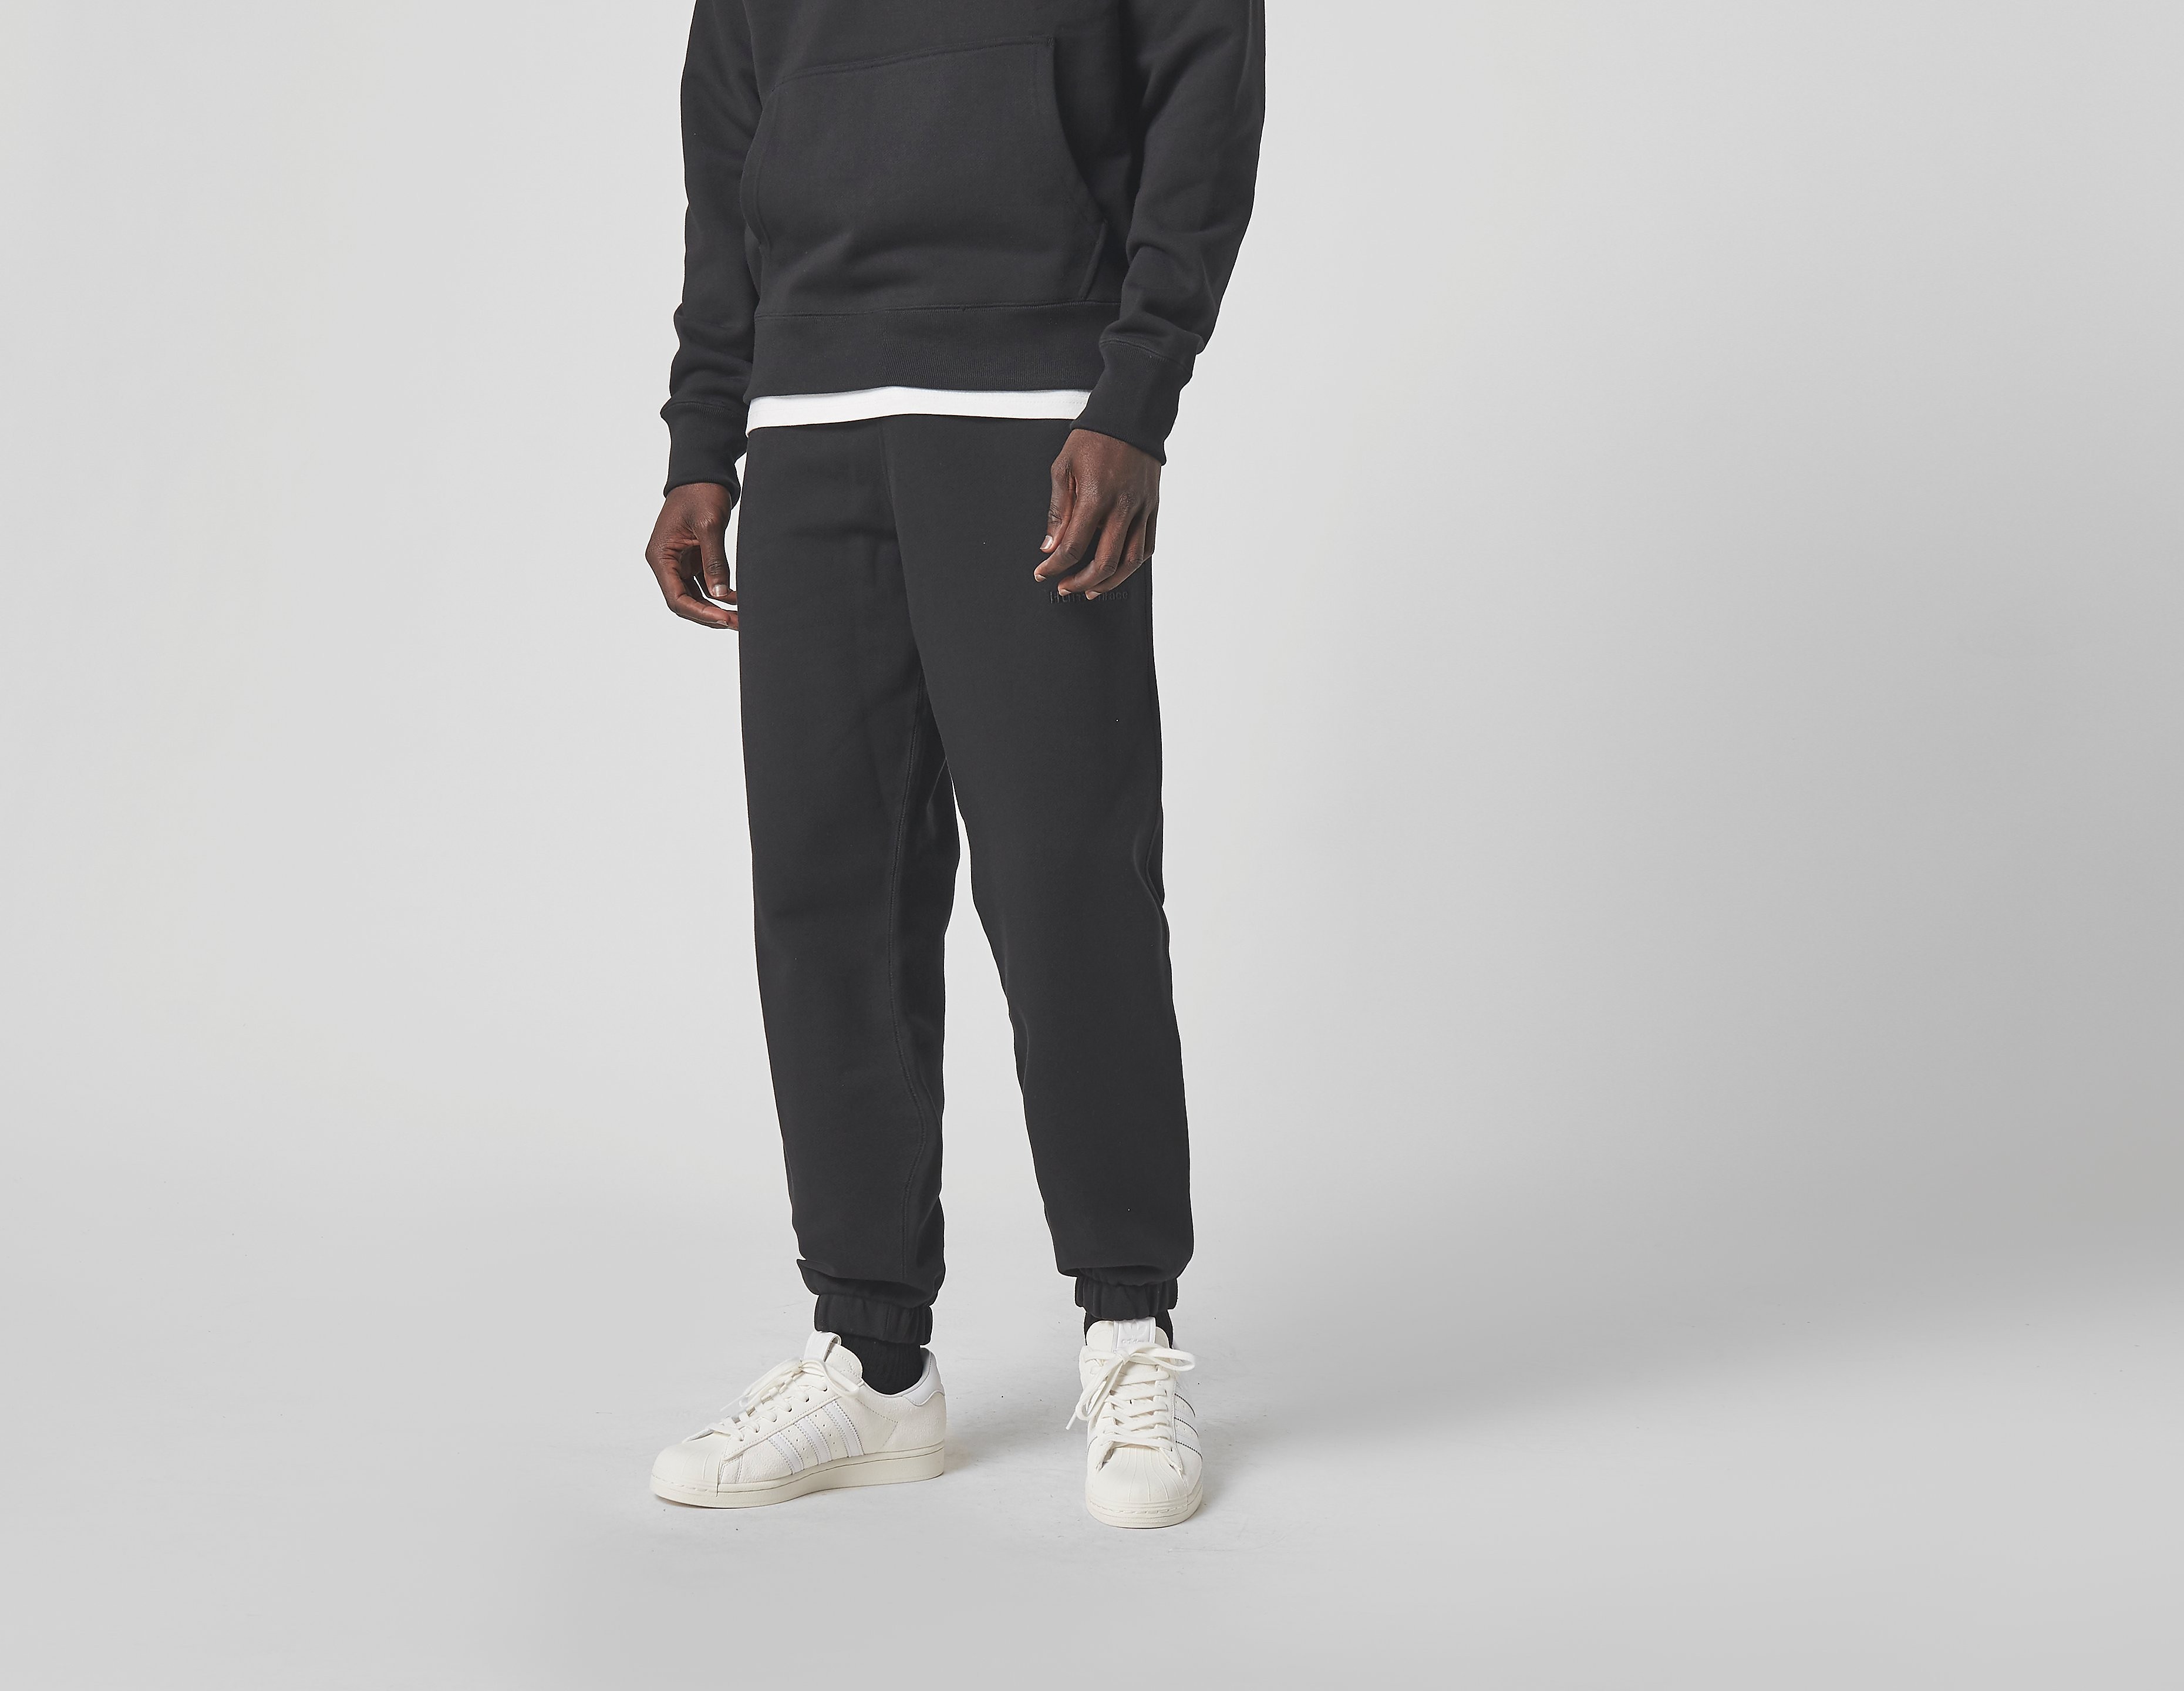 Adidas Originals x Pharrell Williams Basics Pants